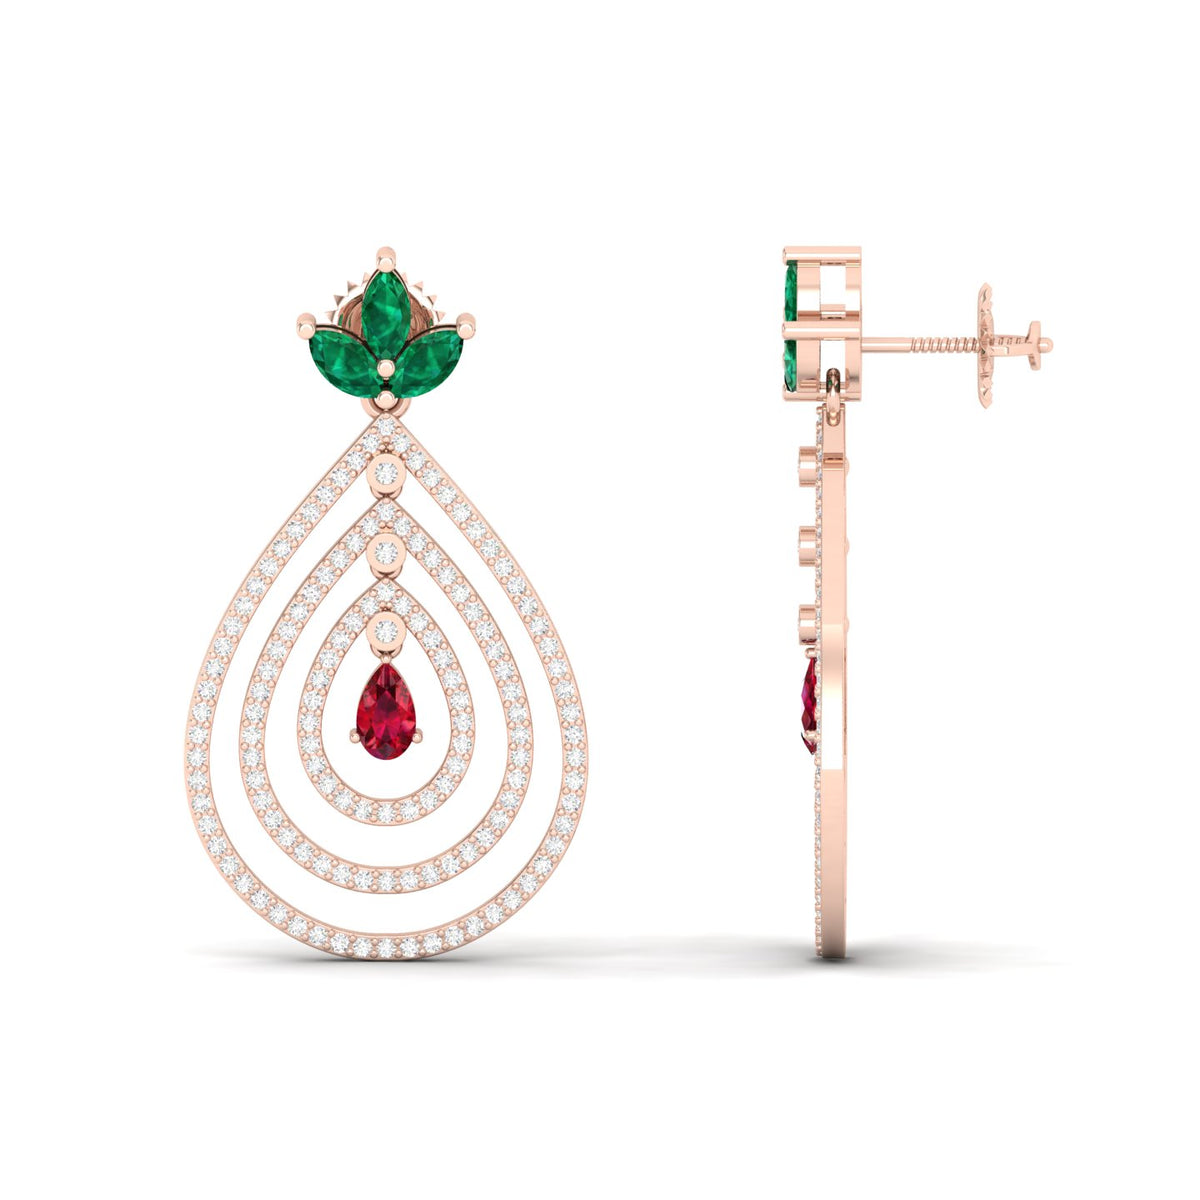 Maurya Fete Emerald Push Back Earrings with Ruby and Diamonds